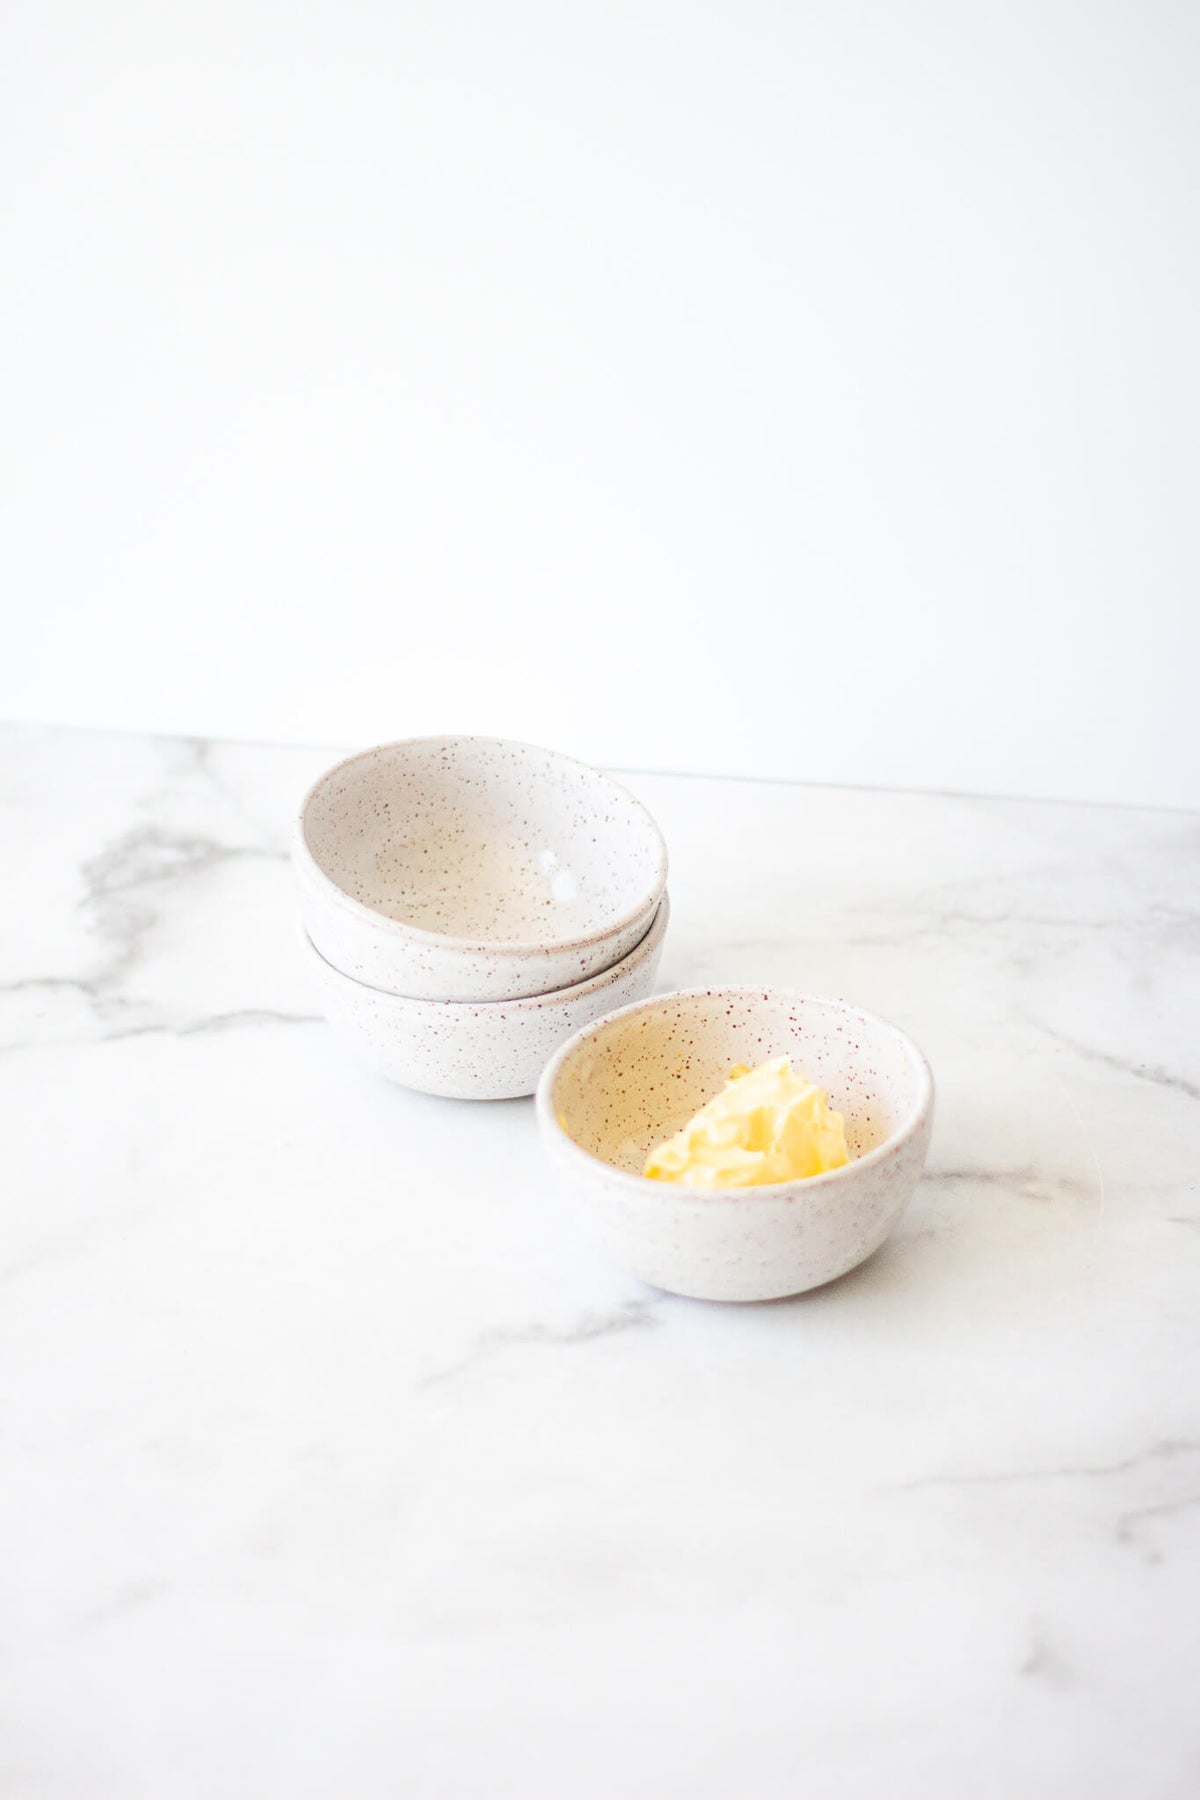 Rachael Pots Clay Salt/Sauce Bowl